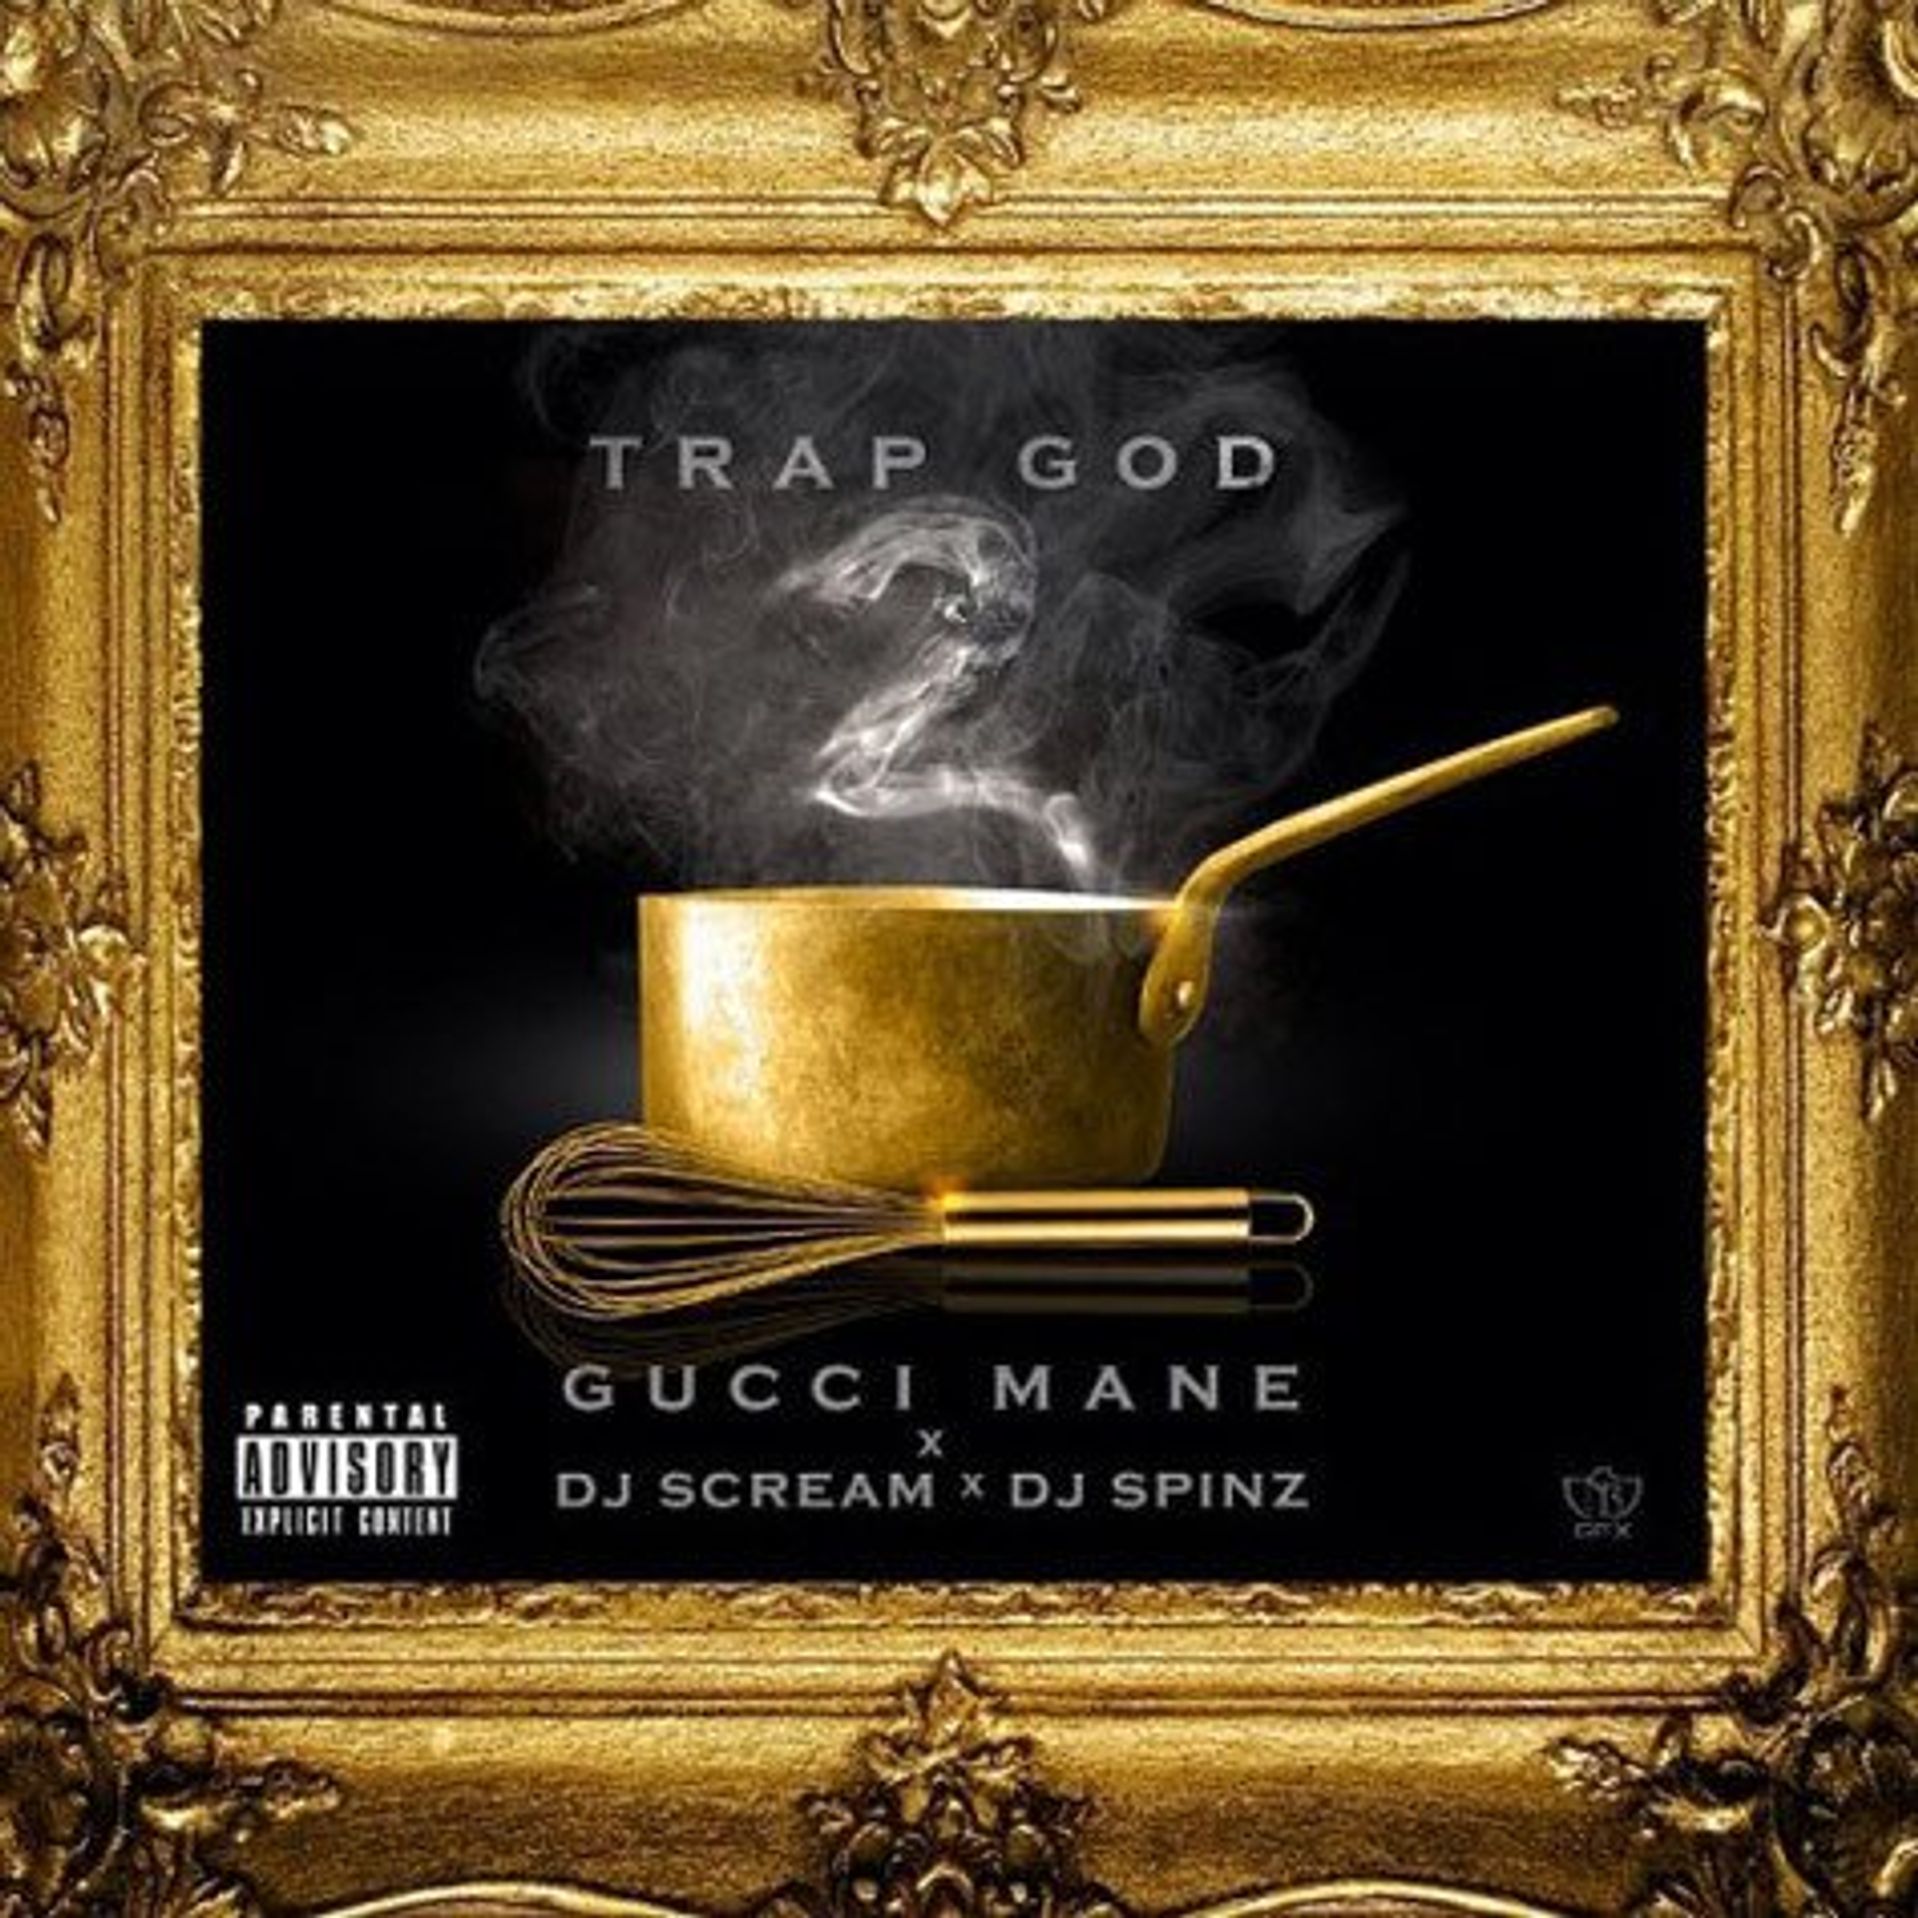 Album Title: Trap God 2 by: Gucci Mane